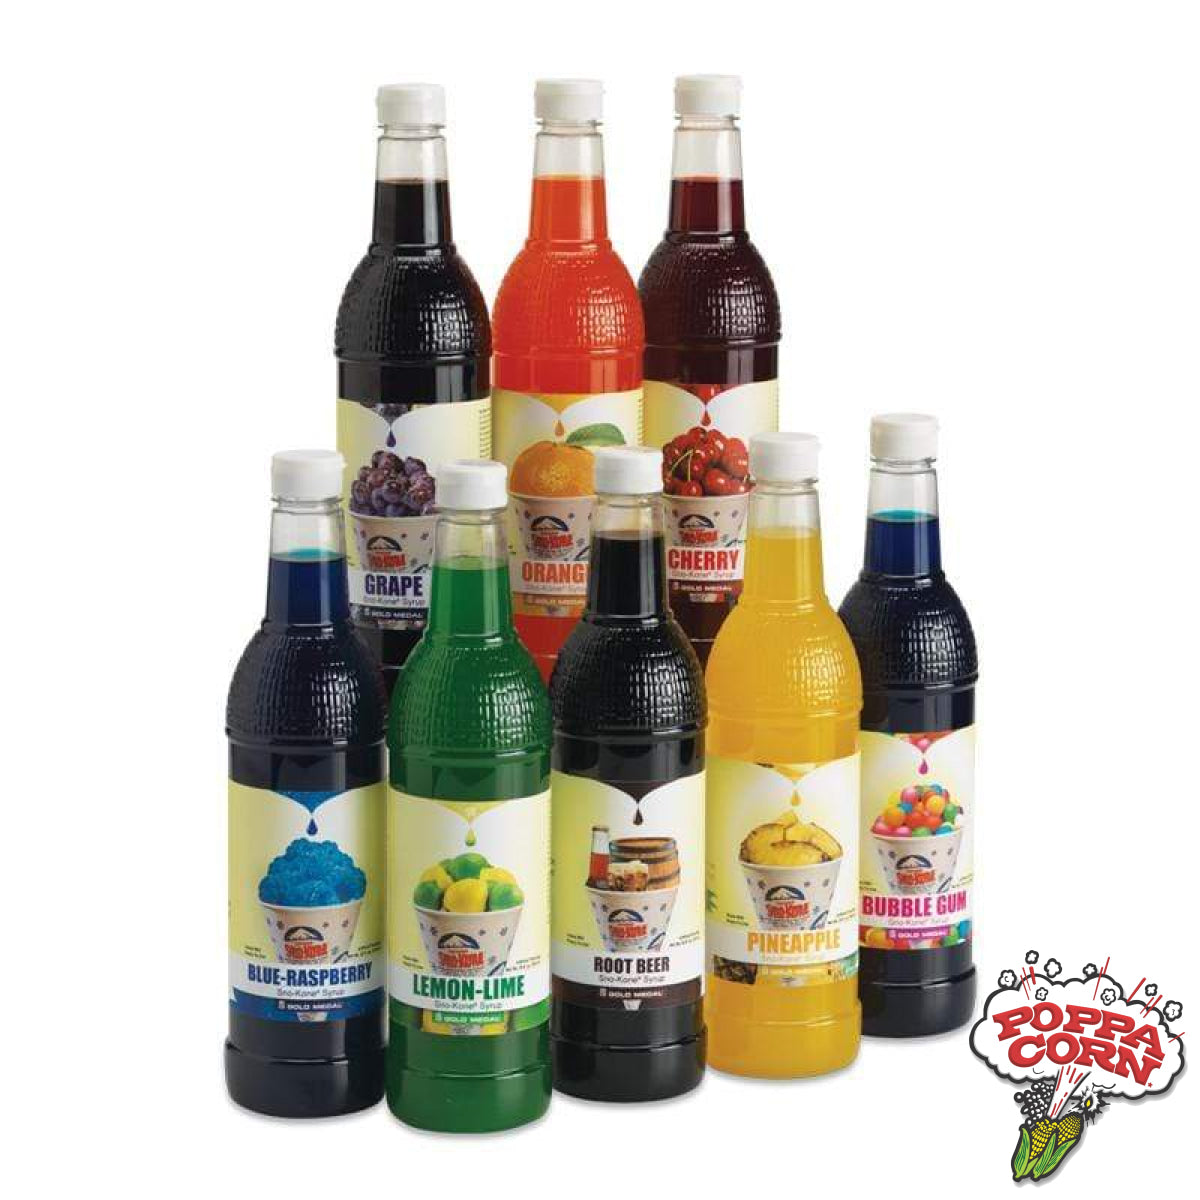 SNK201 - Blue Raspberry - Sno-Treat Sno-Kone® Flavor - 750ml (25oz) Bottle - Poppa Corn Corp